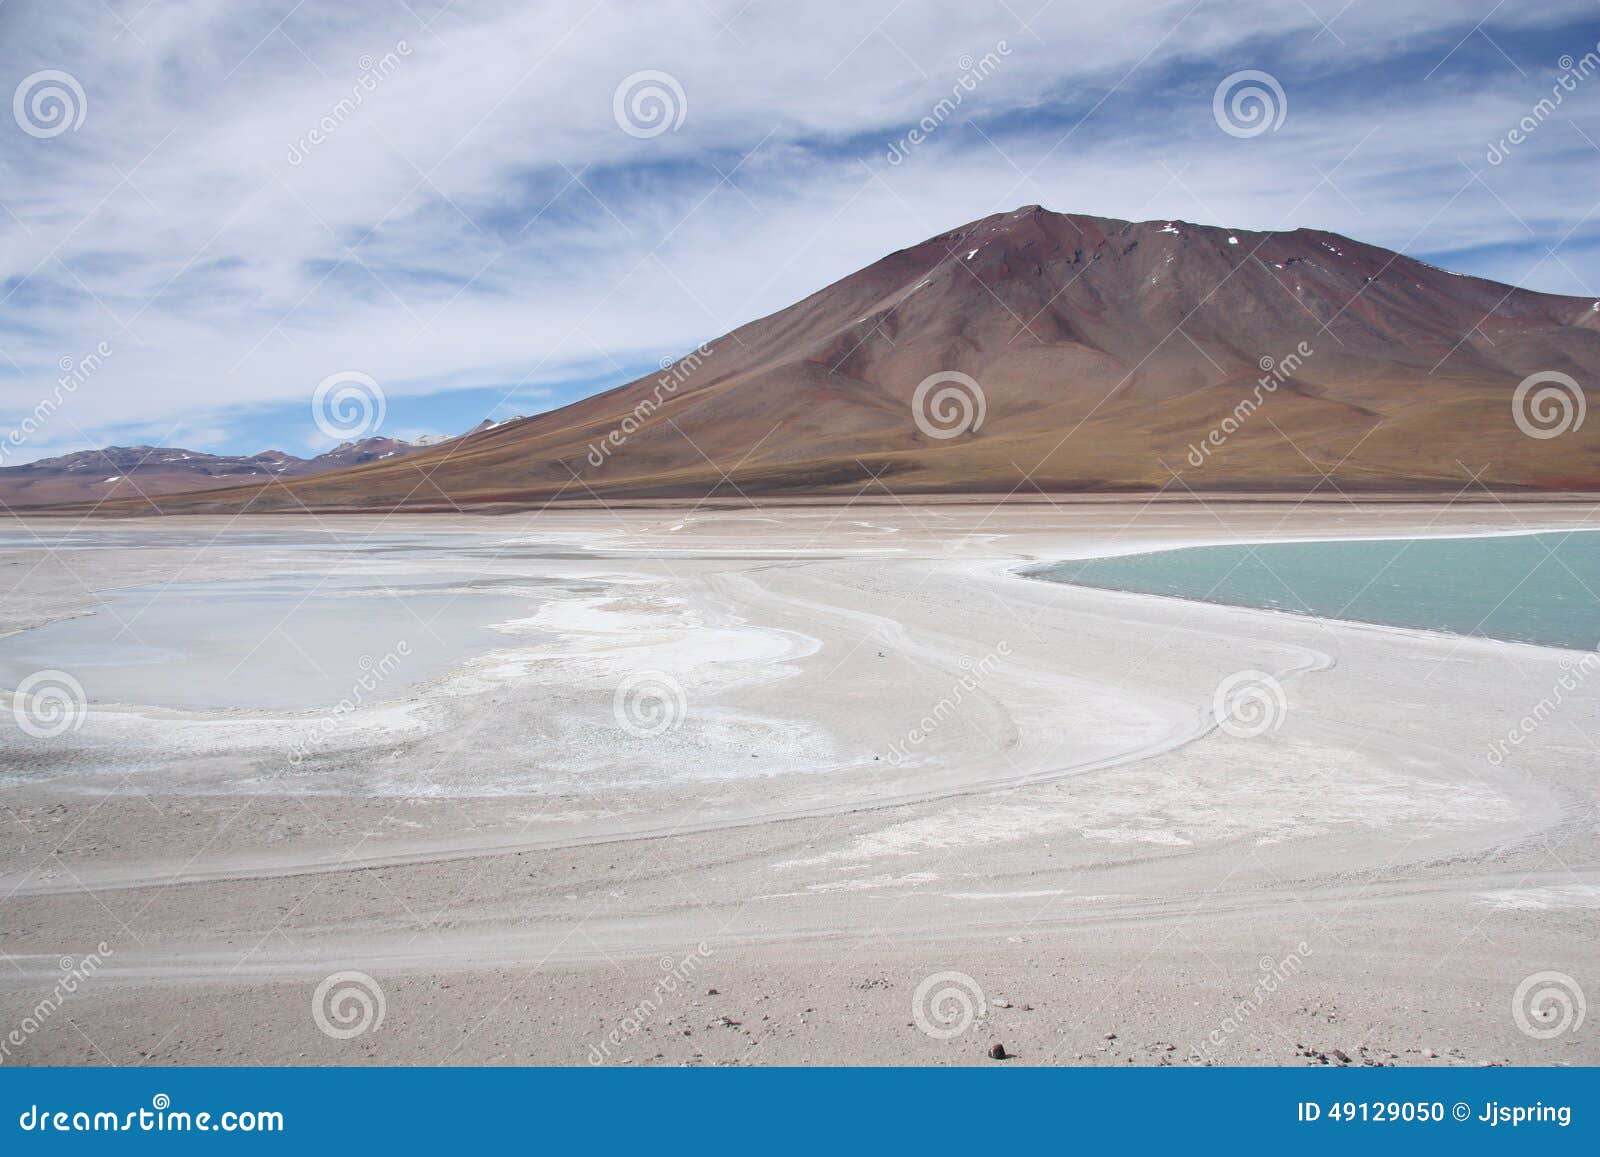 licancabur volcano in atacama desert, bolivia